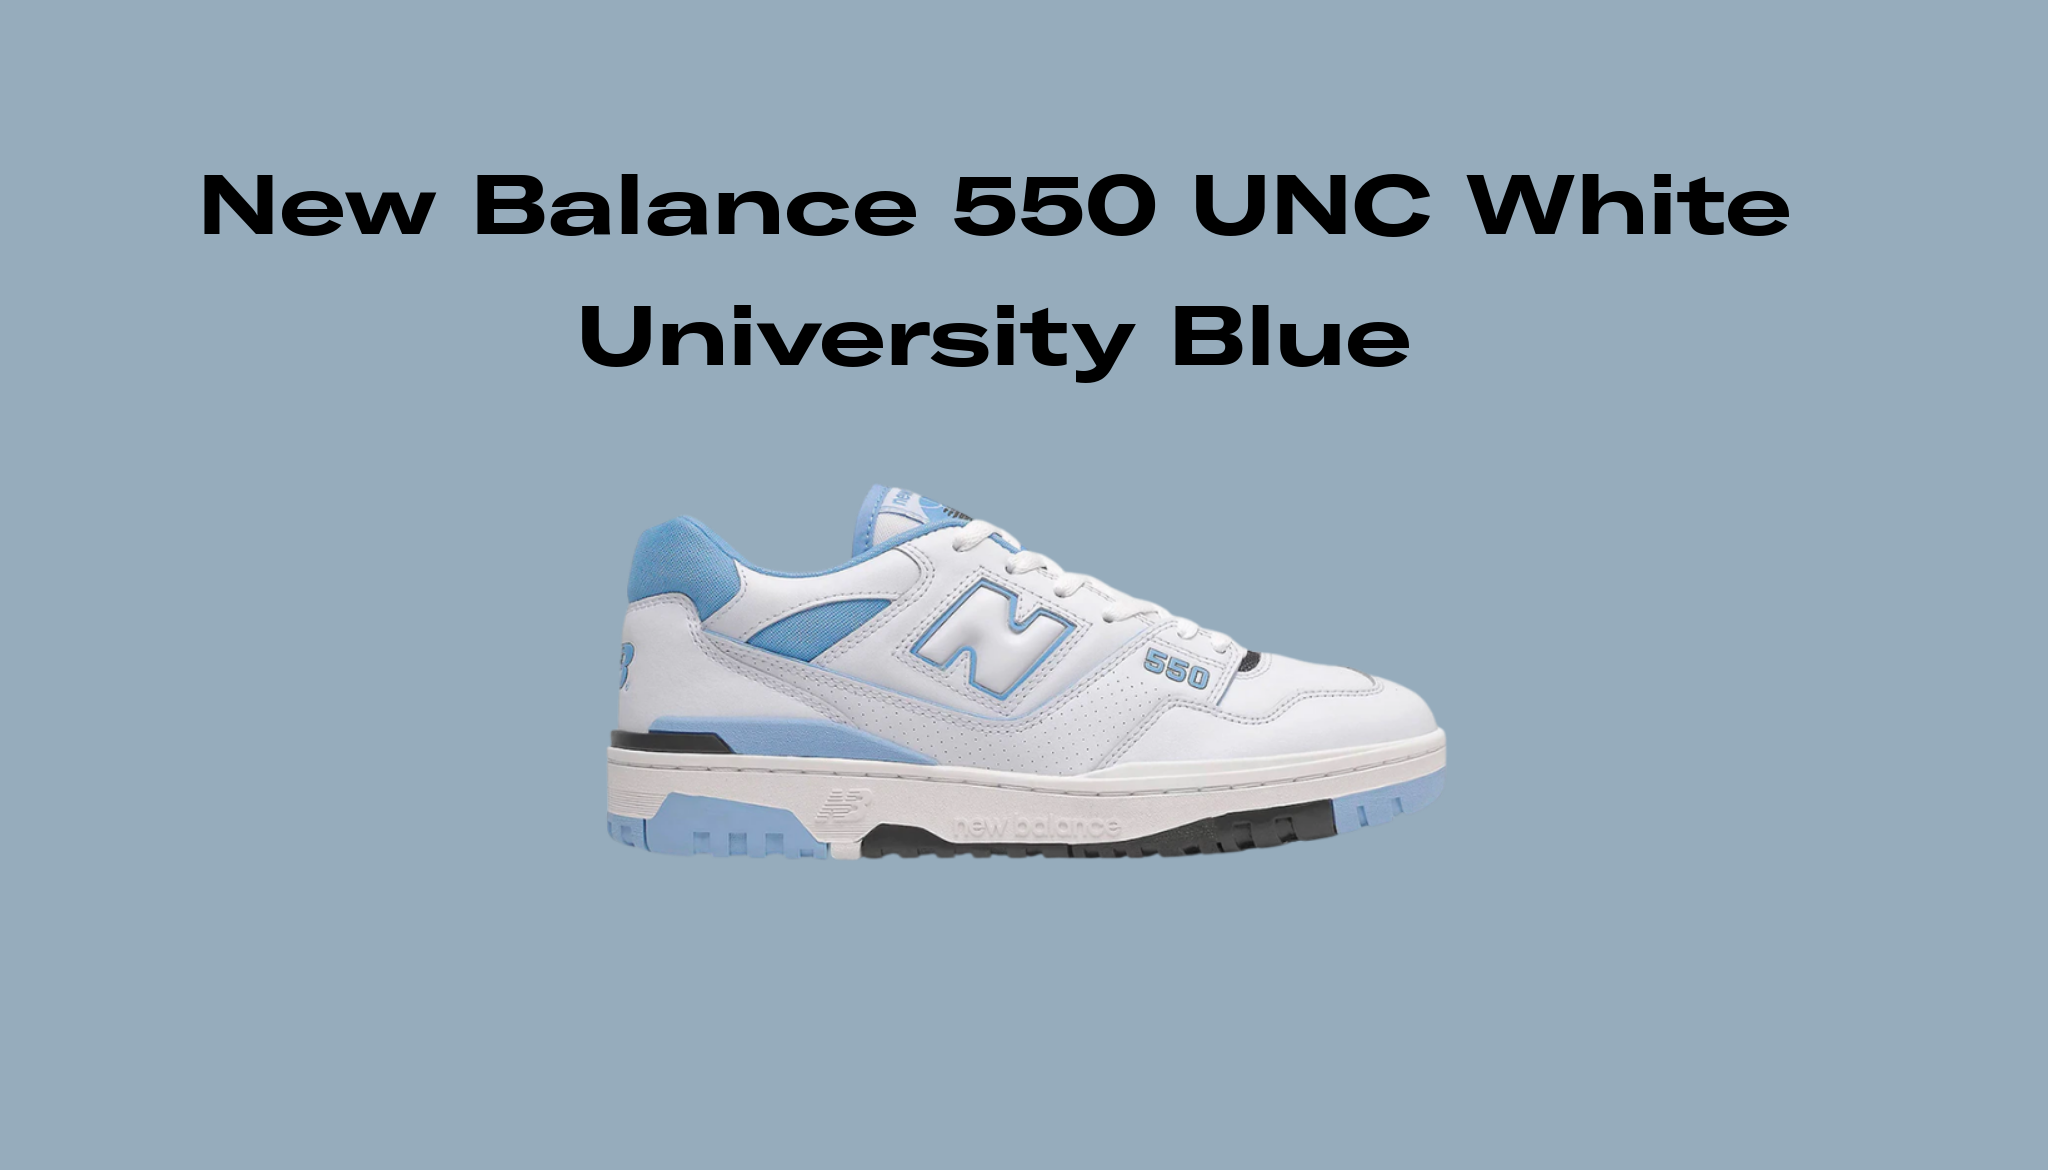 New Balance 550 UNC White University Blue, Raffles and Release 